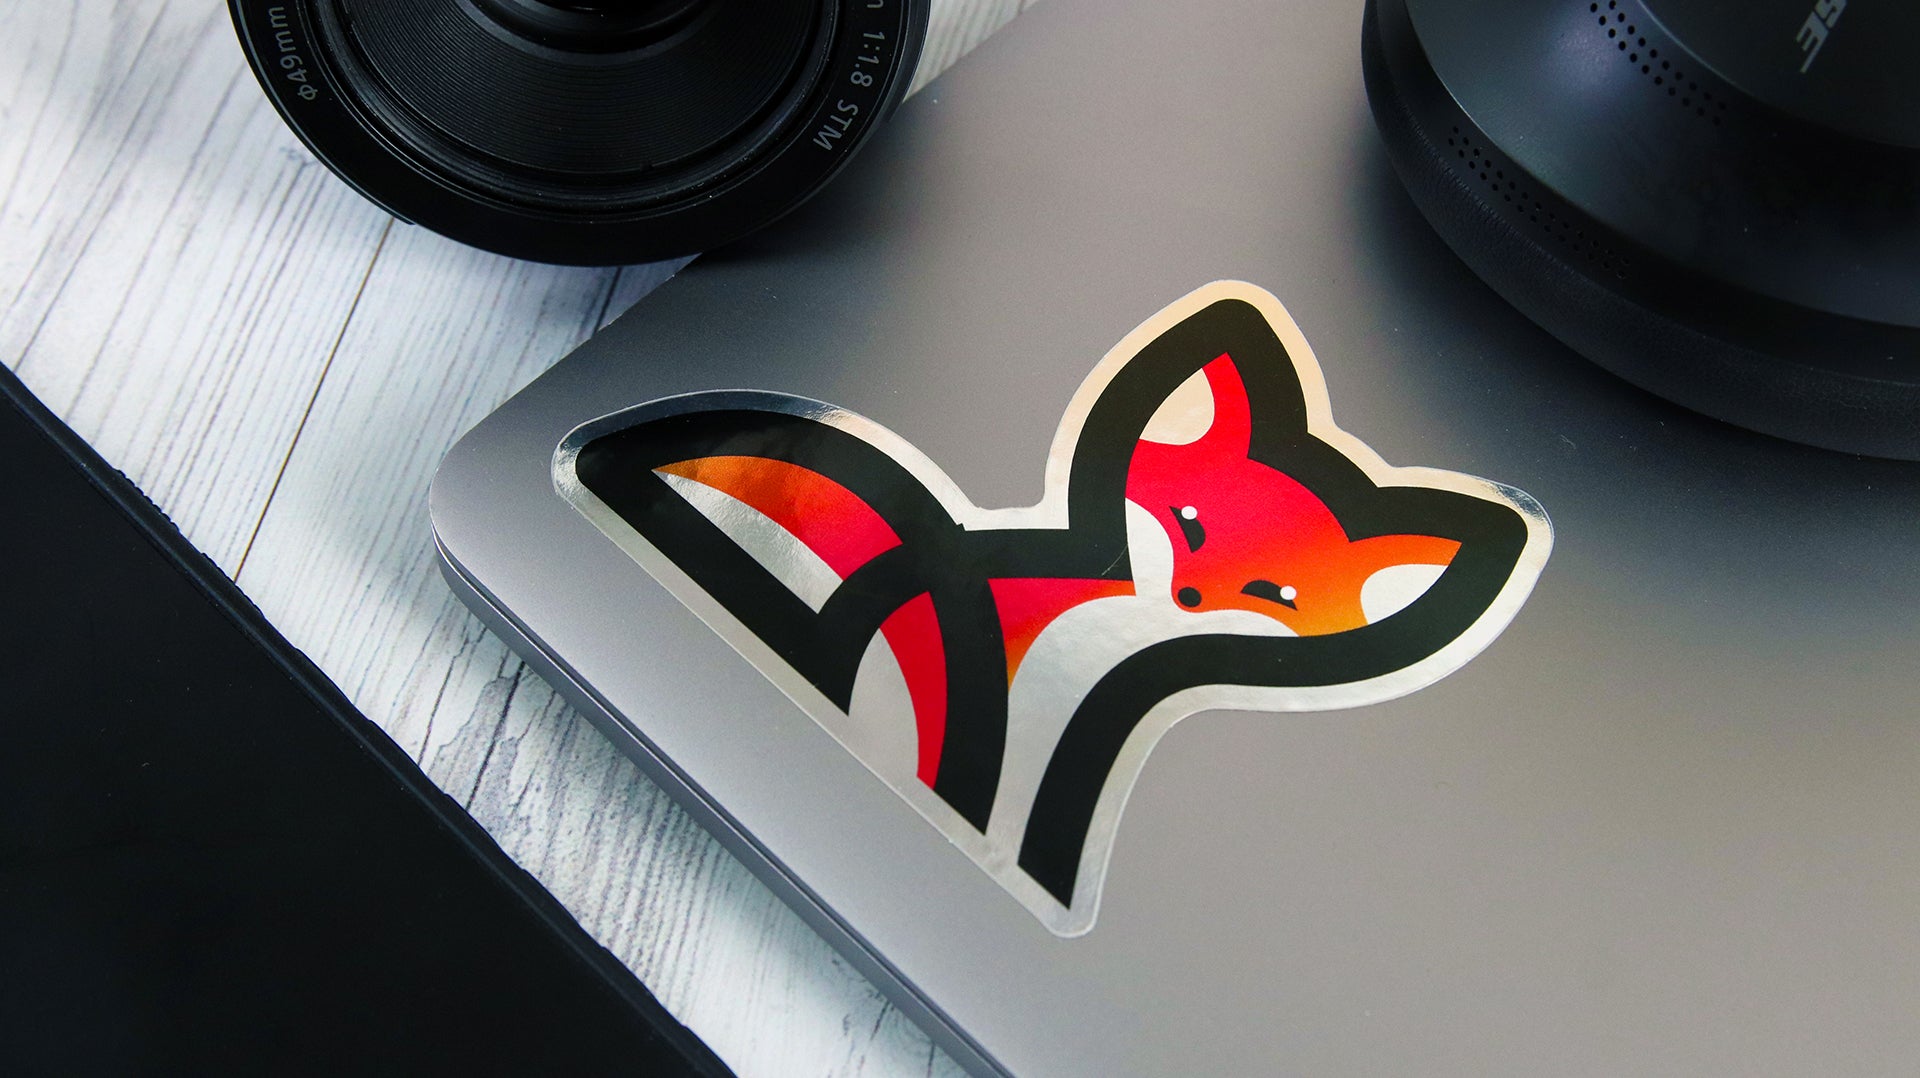 Die cut mirror silver sticker with fox logo design applied to a silver laptop